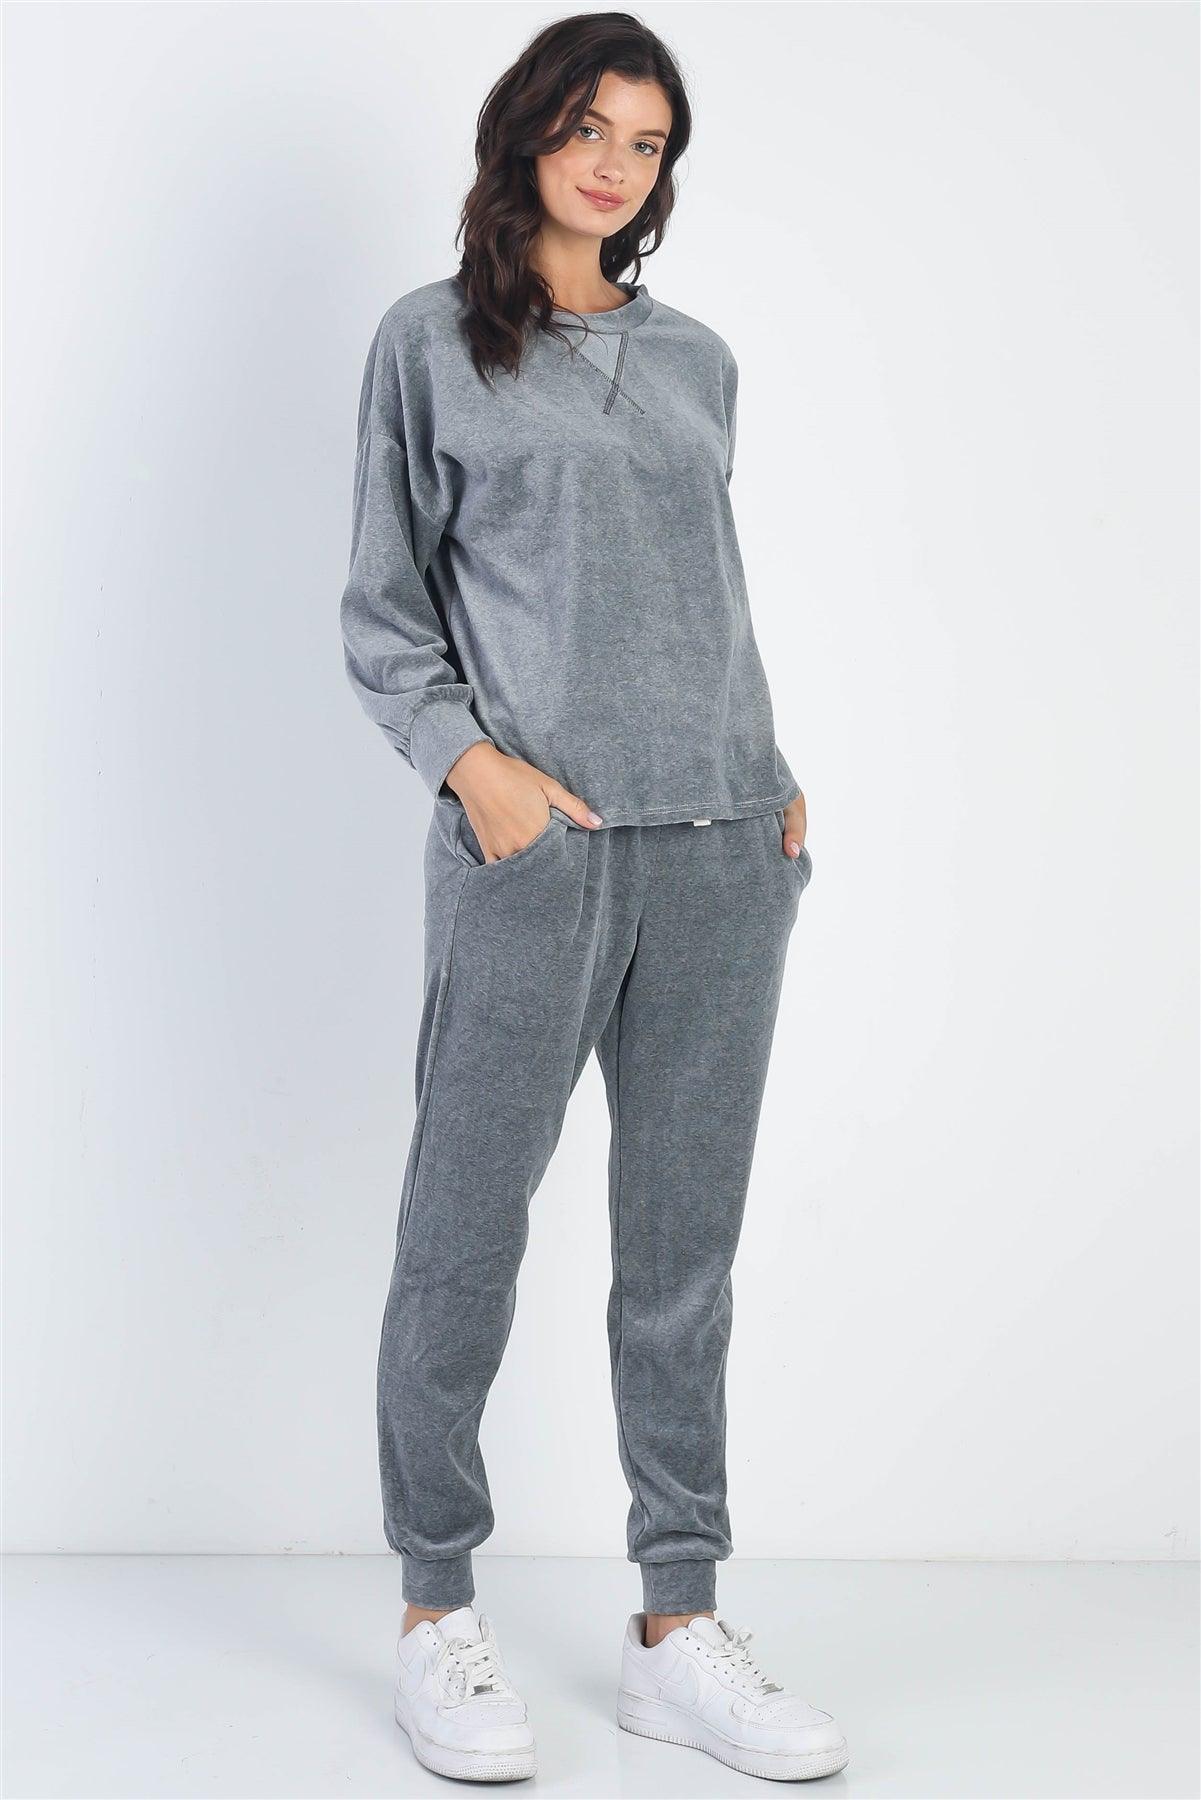 Charcoal Velour Cotton Blend Long Sleeve Sweater & Pant Set  /1-1-1